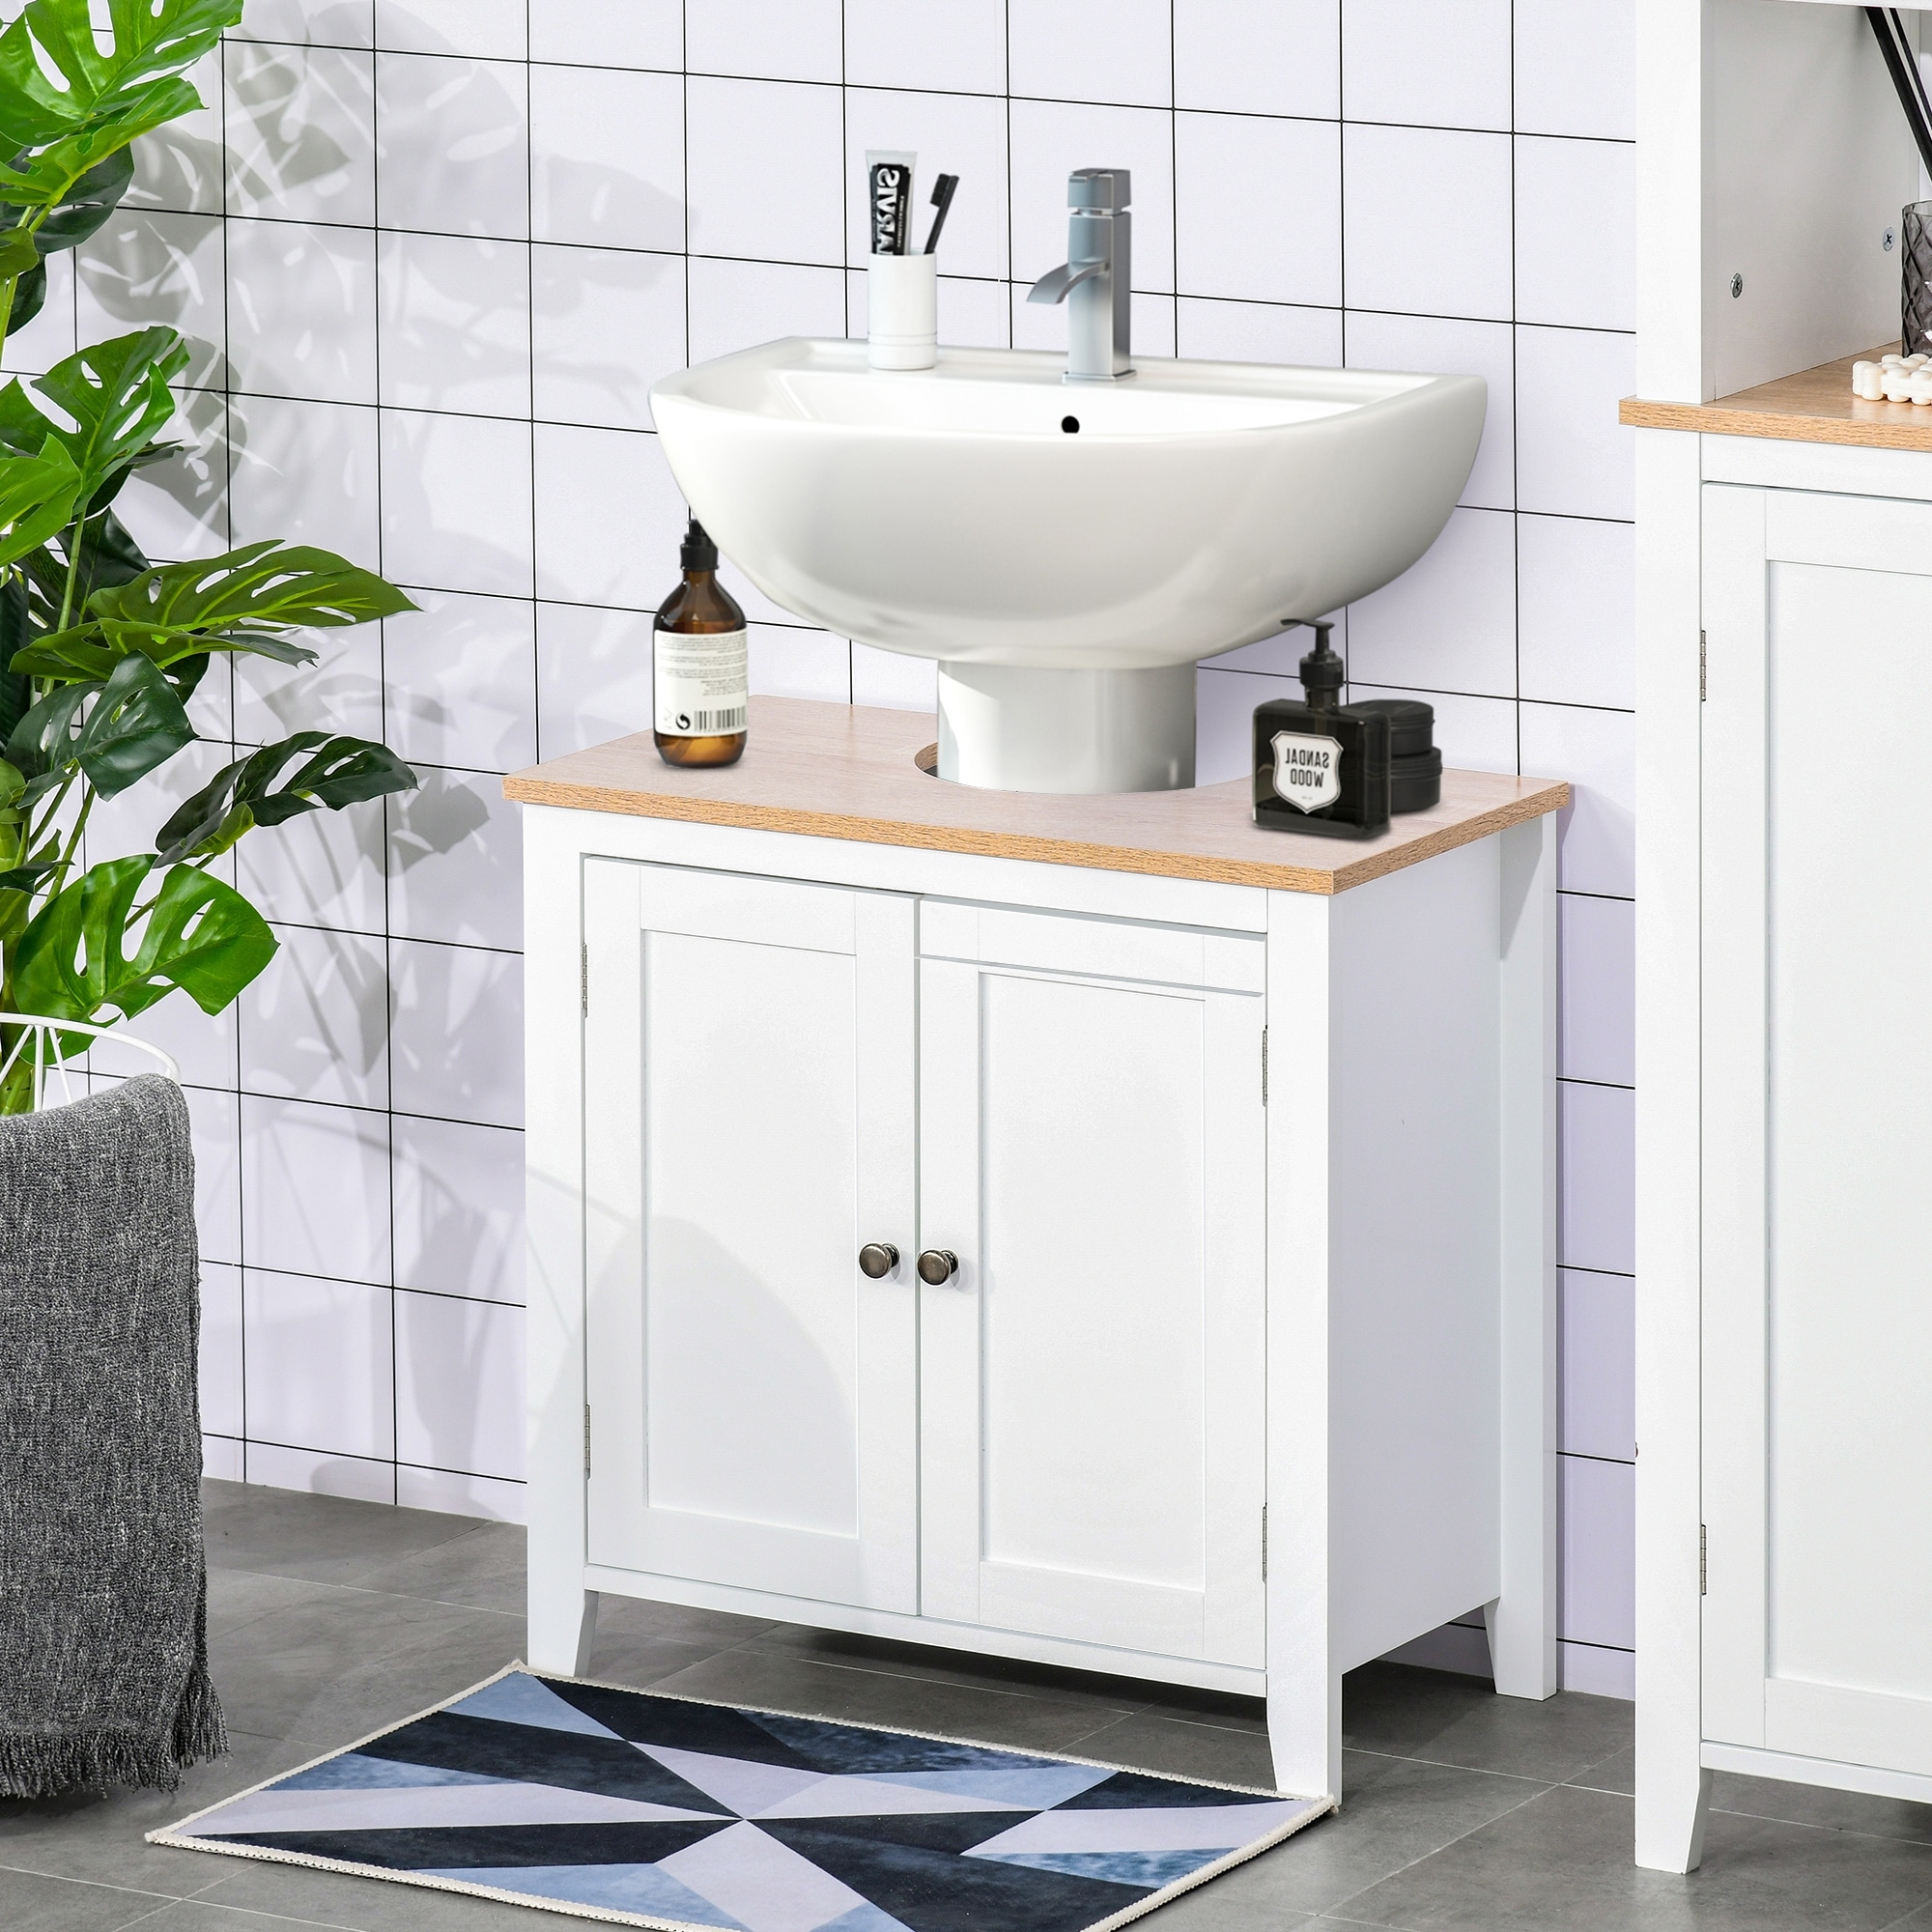 https://ak1.ostkcdn.com/images/products/is/images/direct/470191eb0077f1c3af55ddd2115b7b75d7296f9f/Kleankin-Under-Sink-Bathroom-Sink-Cabinet%2C-Storage-Unit-with-U-Shape-and-Adjustable-Internal-Shelf%2C-White.jpg